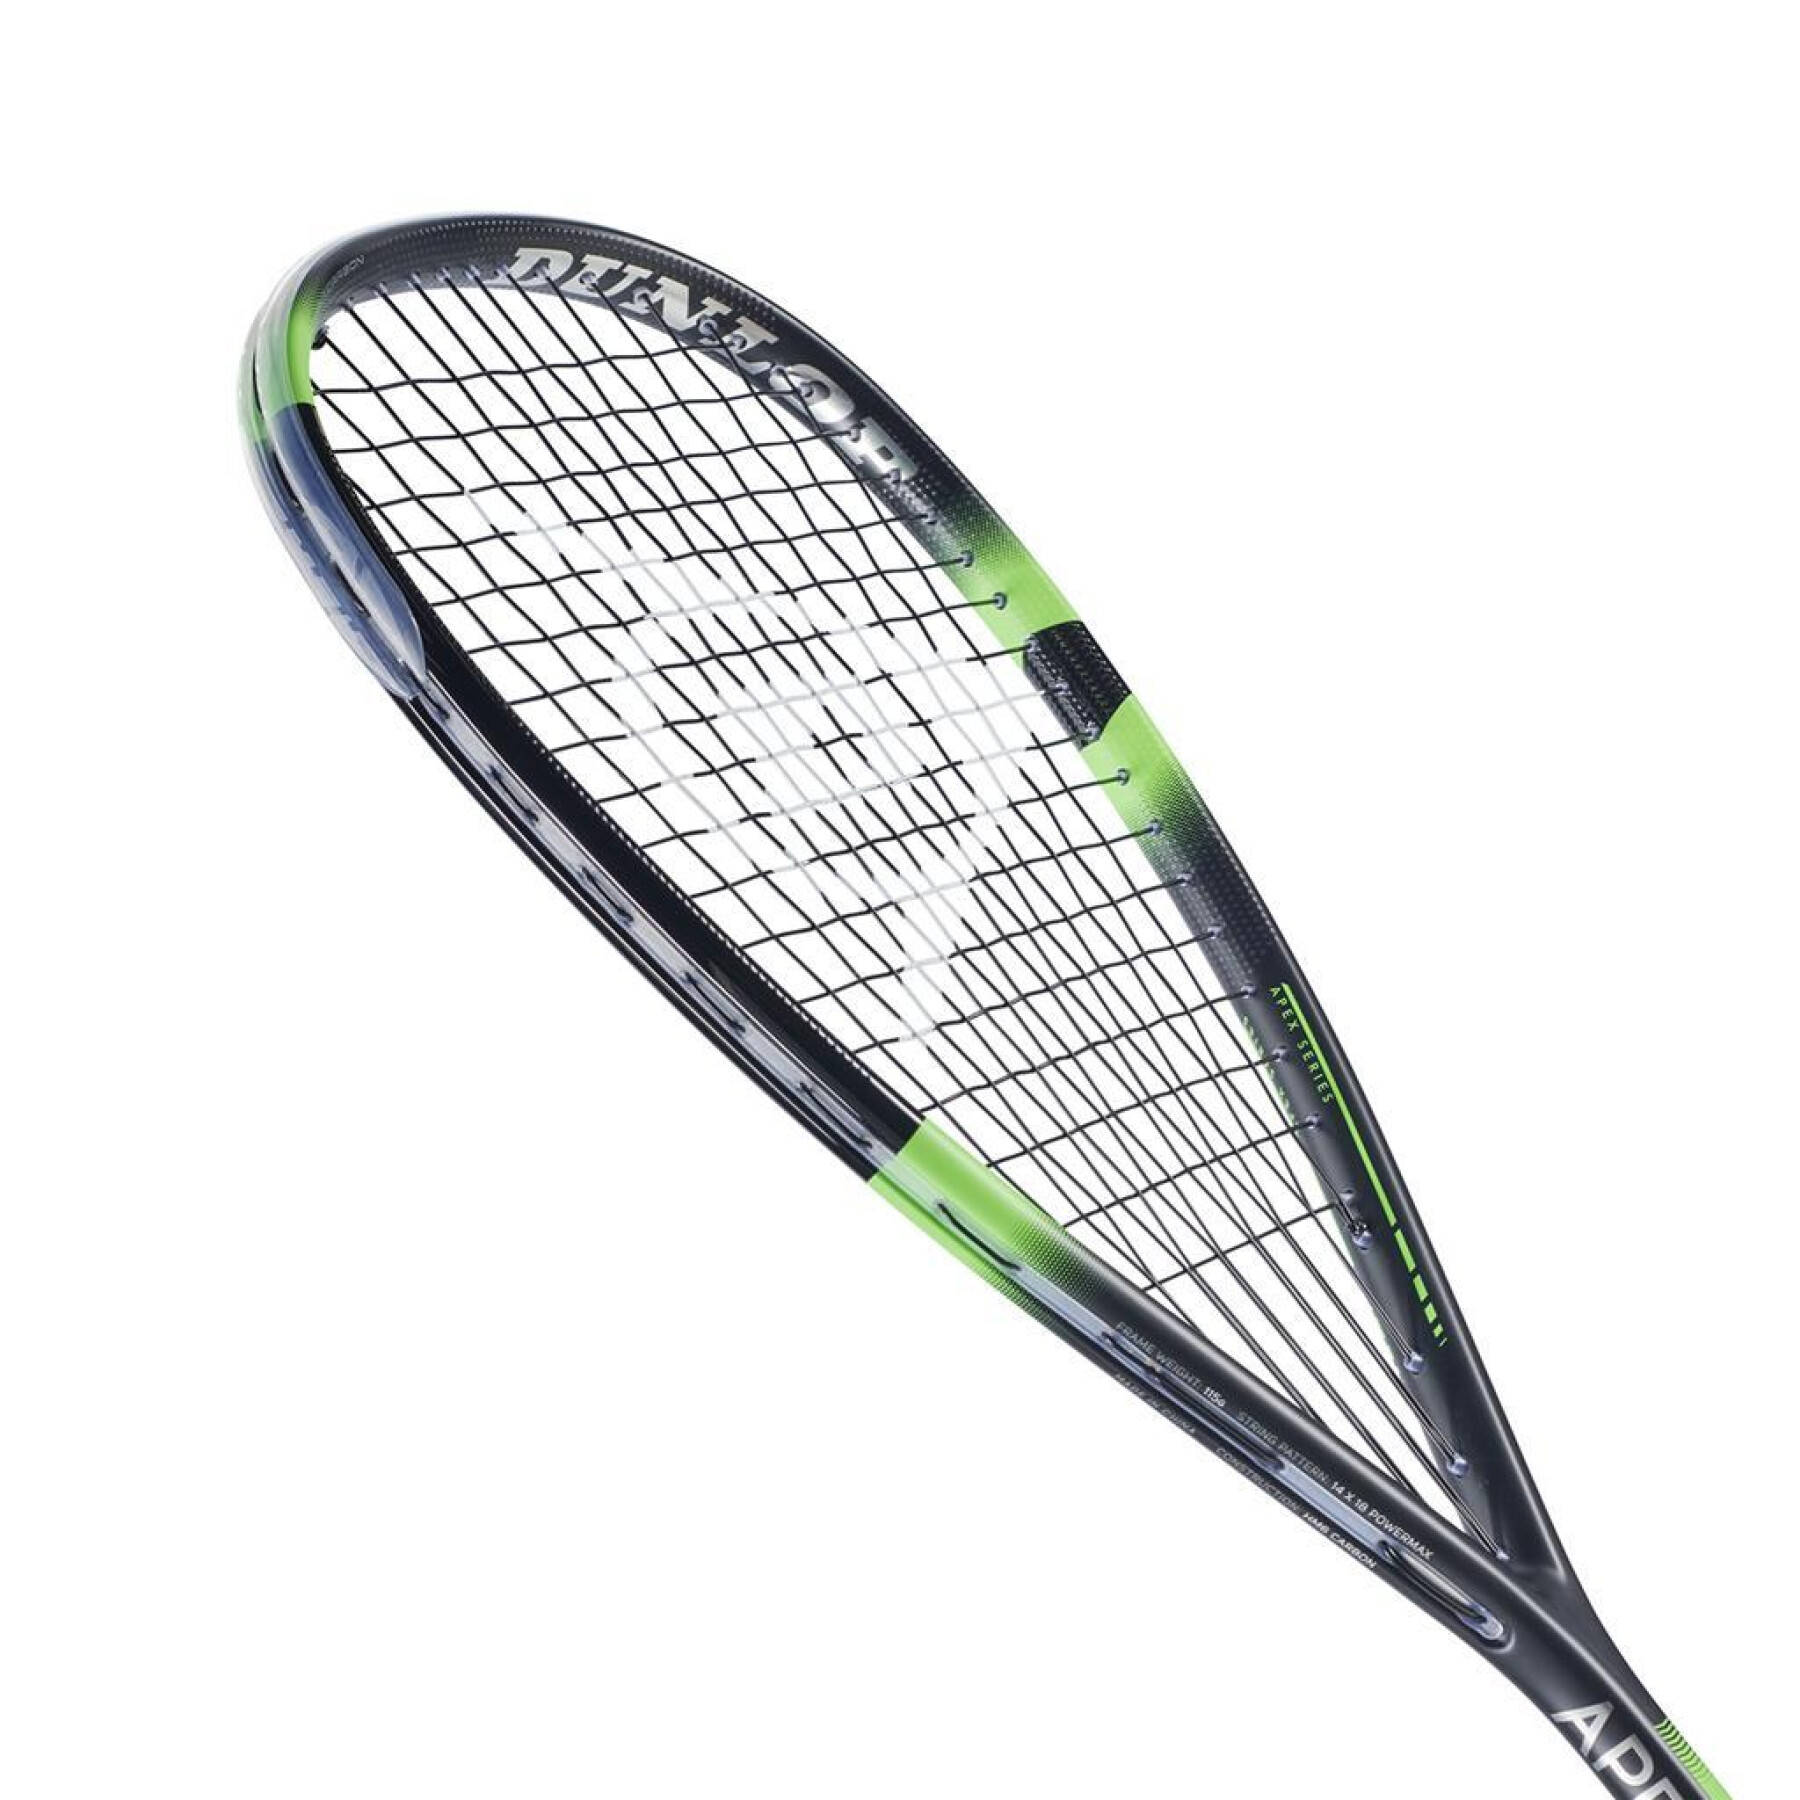 Racchetta da squash Dunlop Apex Infinity